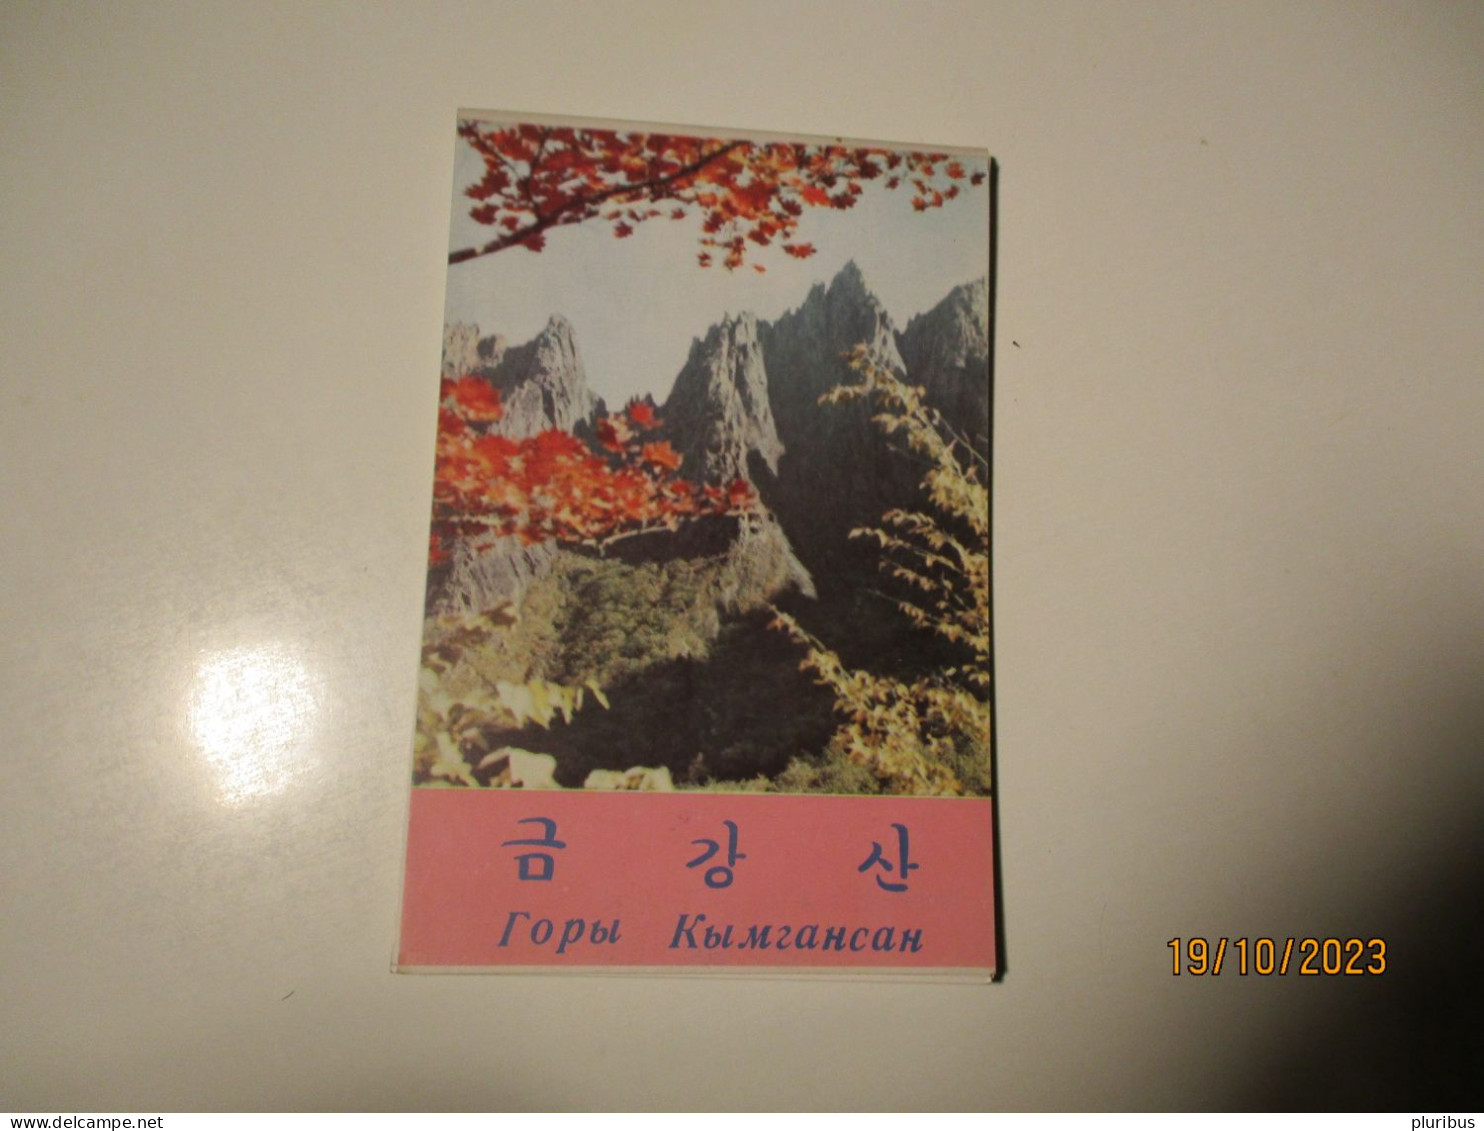 NORTH KOREA , SET OF 9 POSTCARDS KYMGANSAN KUMGANSAN KUMGAN MOUNTAINS 1969 - Corée Du Nord